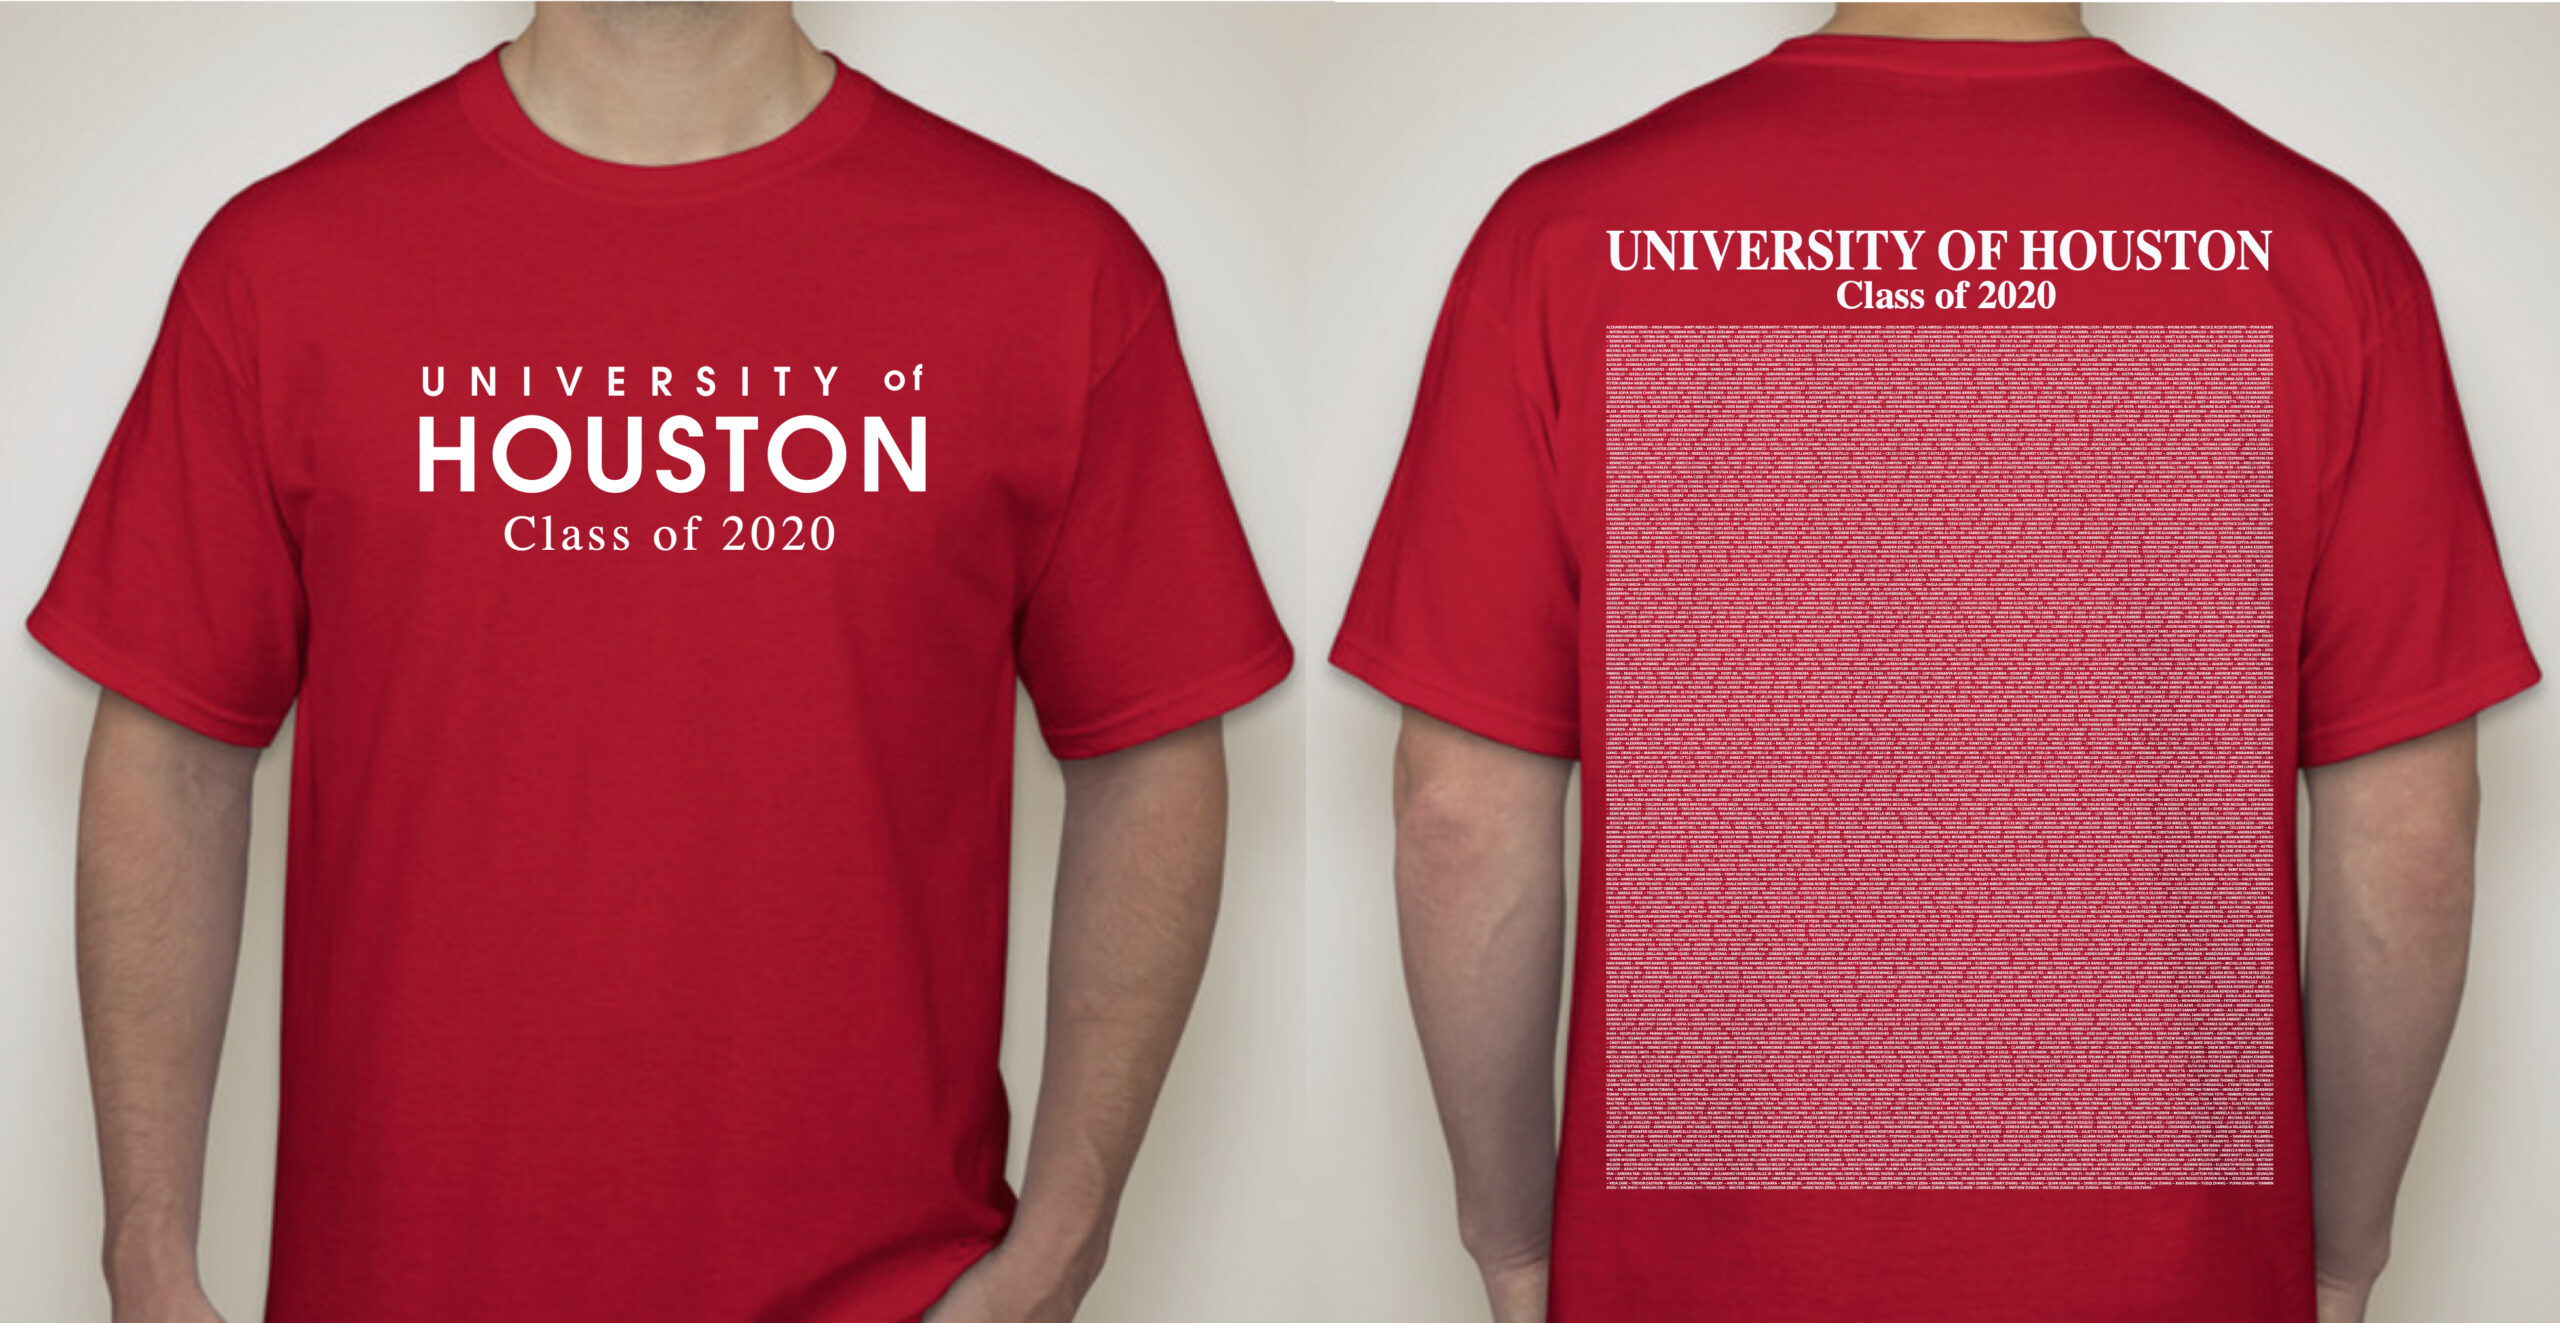 University of Houston Commencement Group